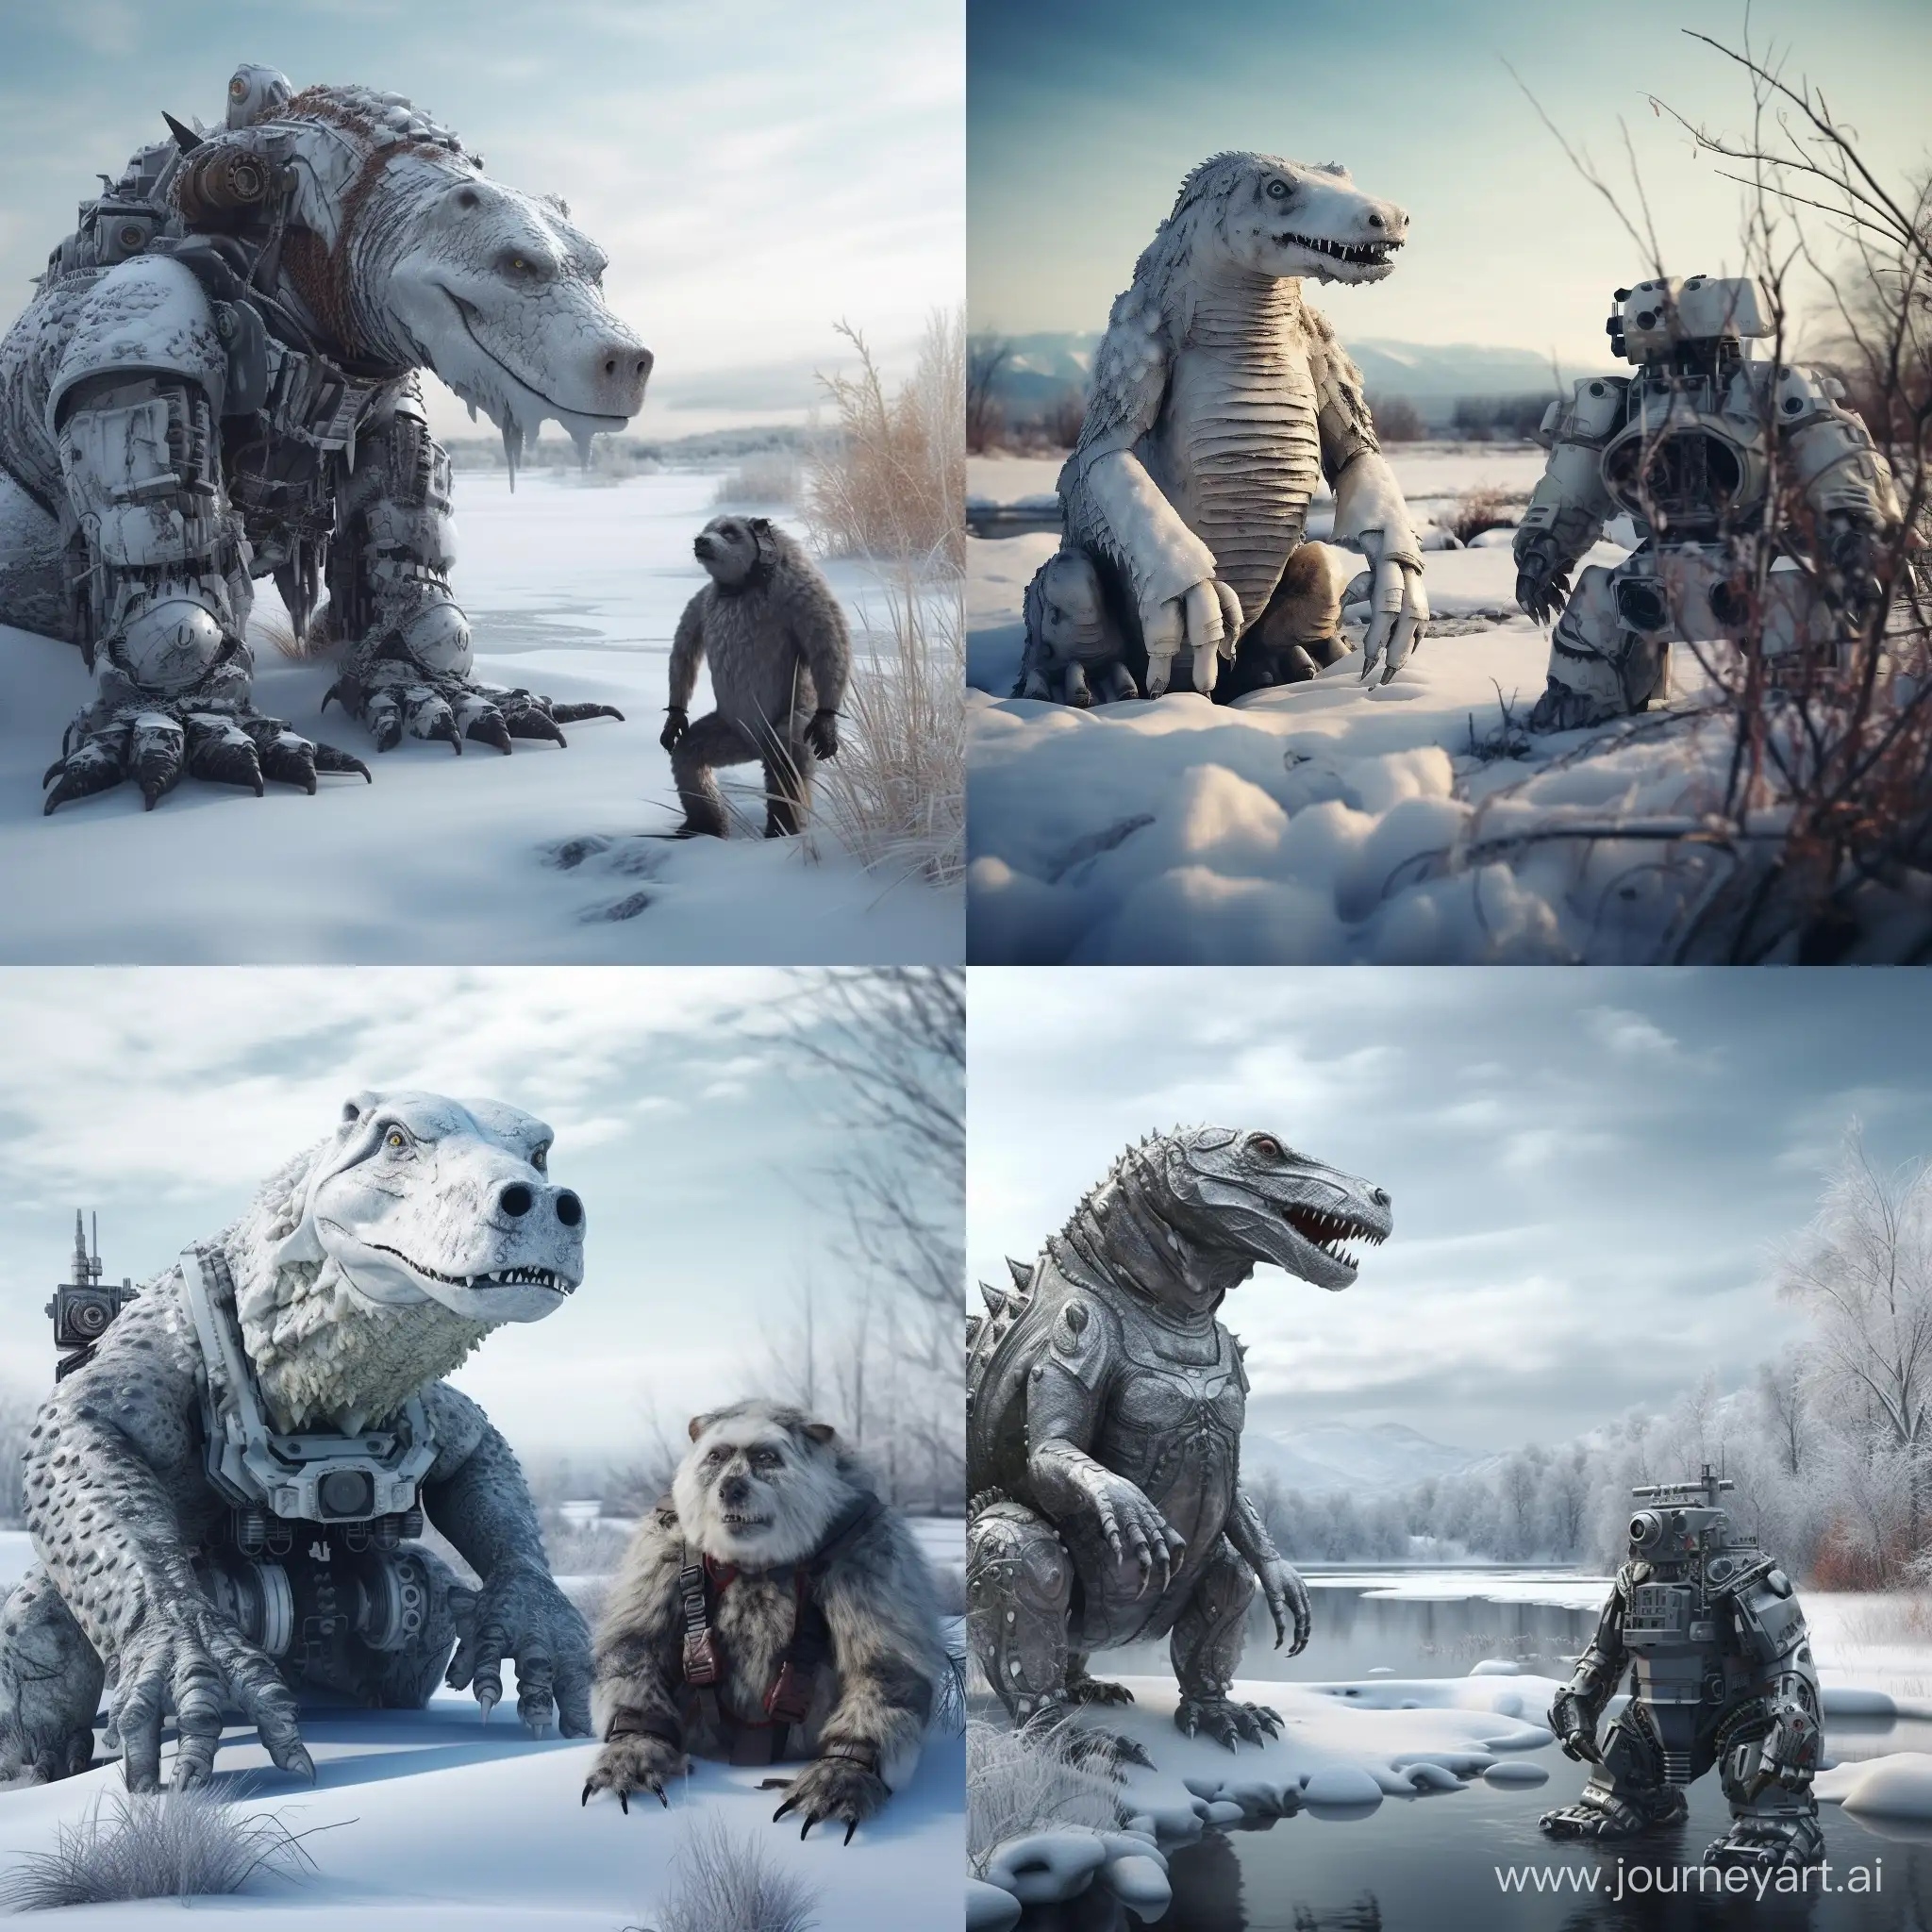 Realistic-Robotic-Crocodile-and-Bear-in-Snowy-Siberian-Landscape